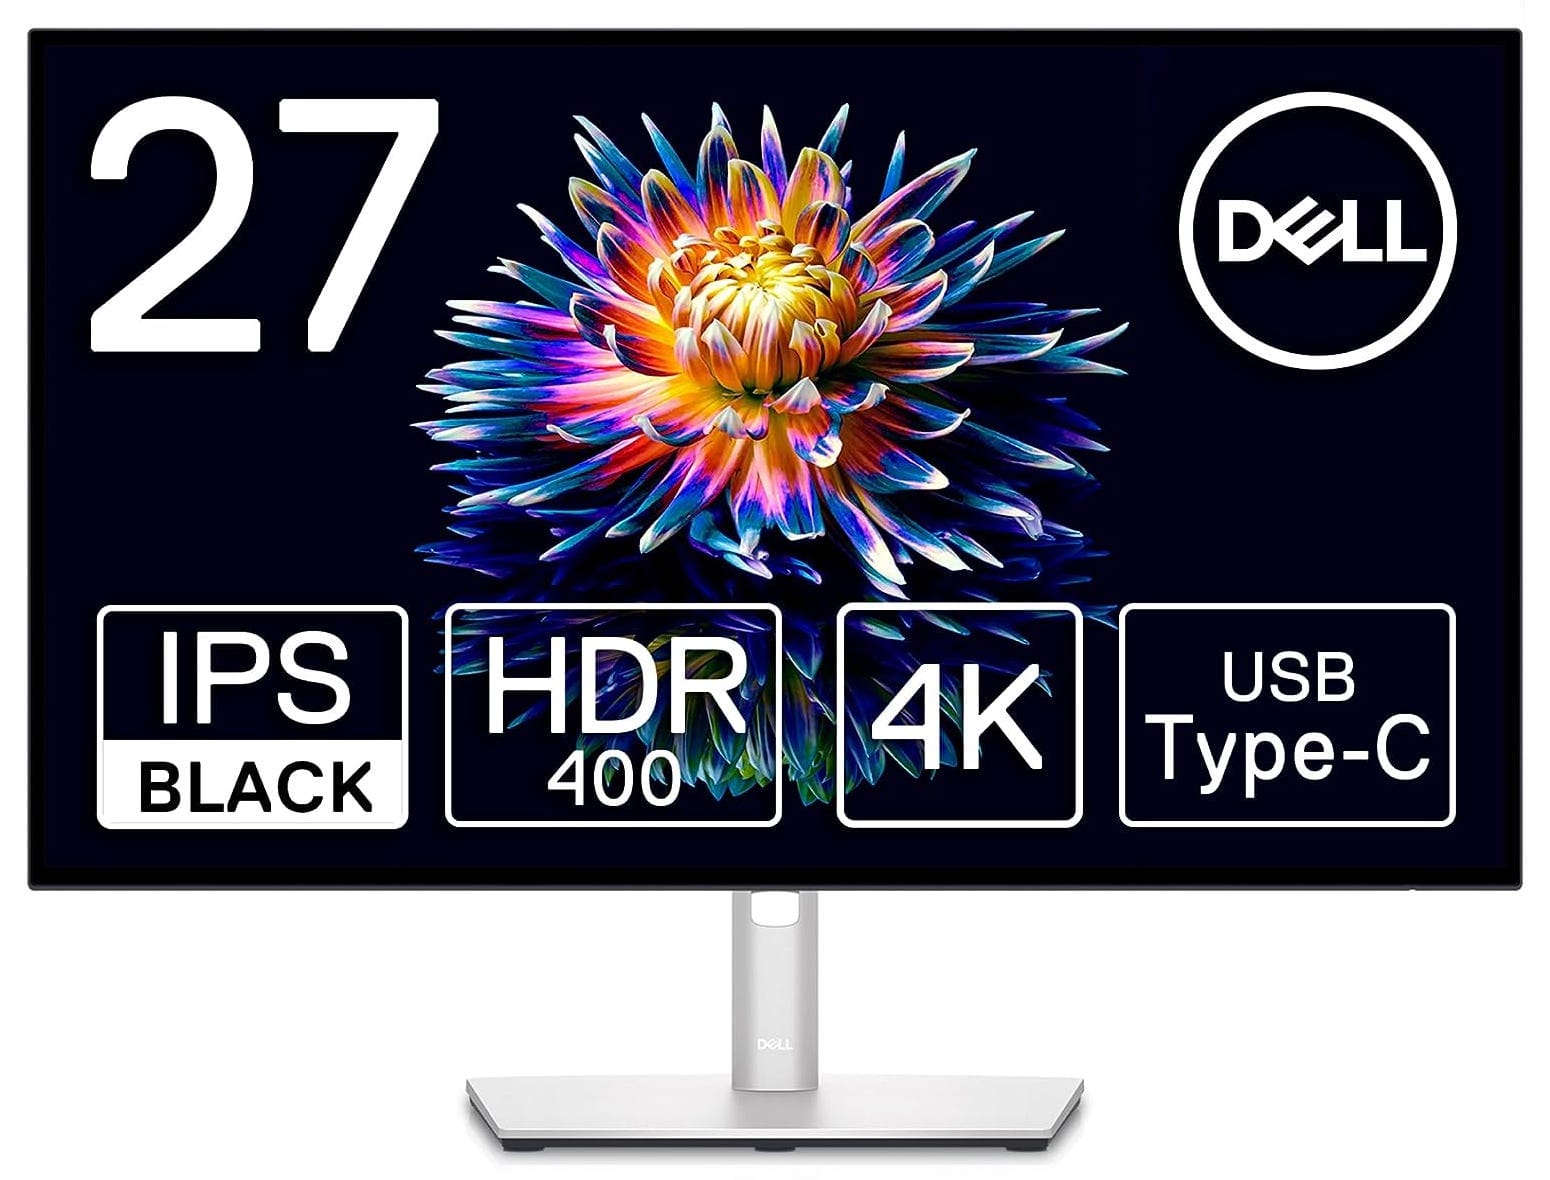 DellのIPS Blackパネル搭載27インチ4K USB-Cモニターが12%オフ